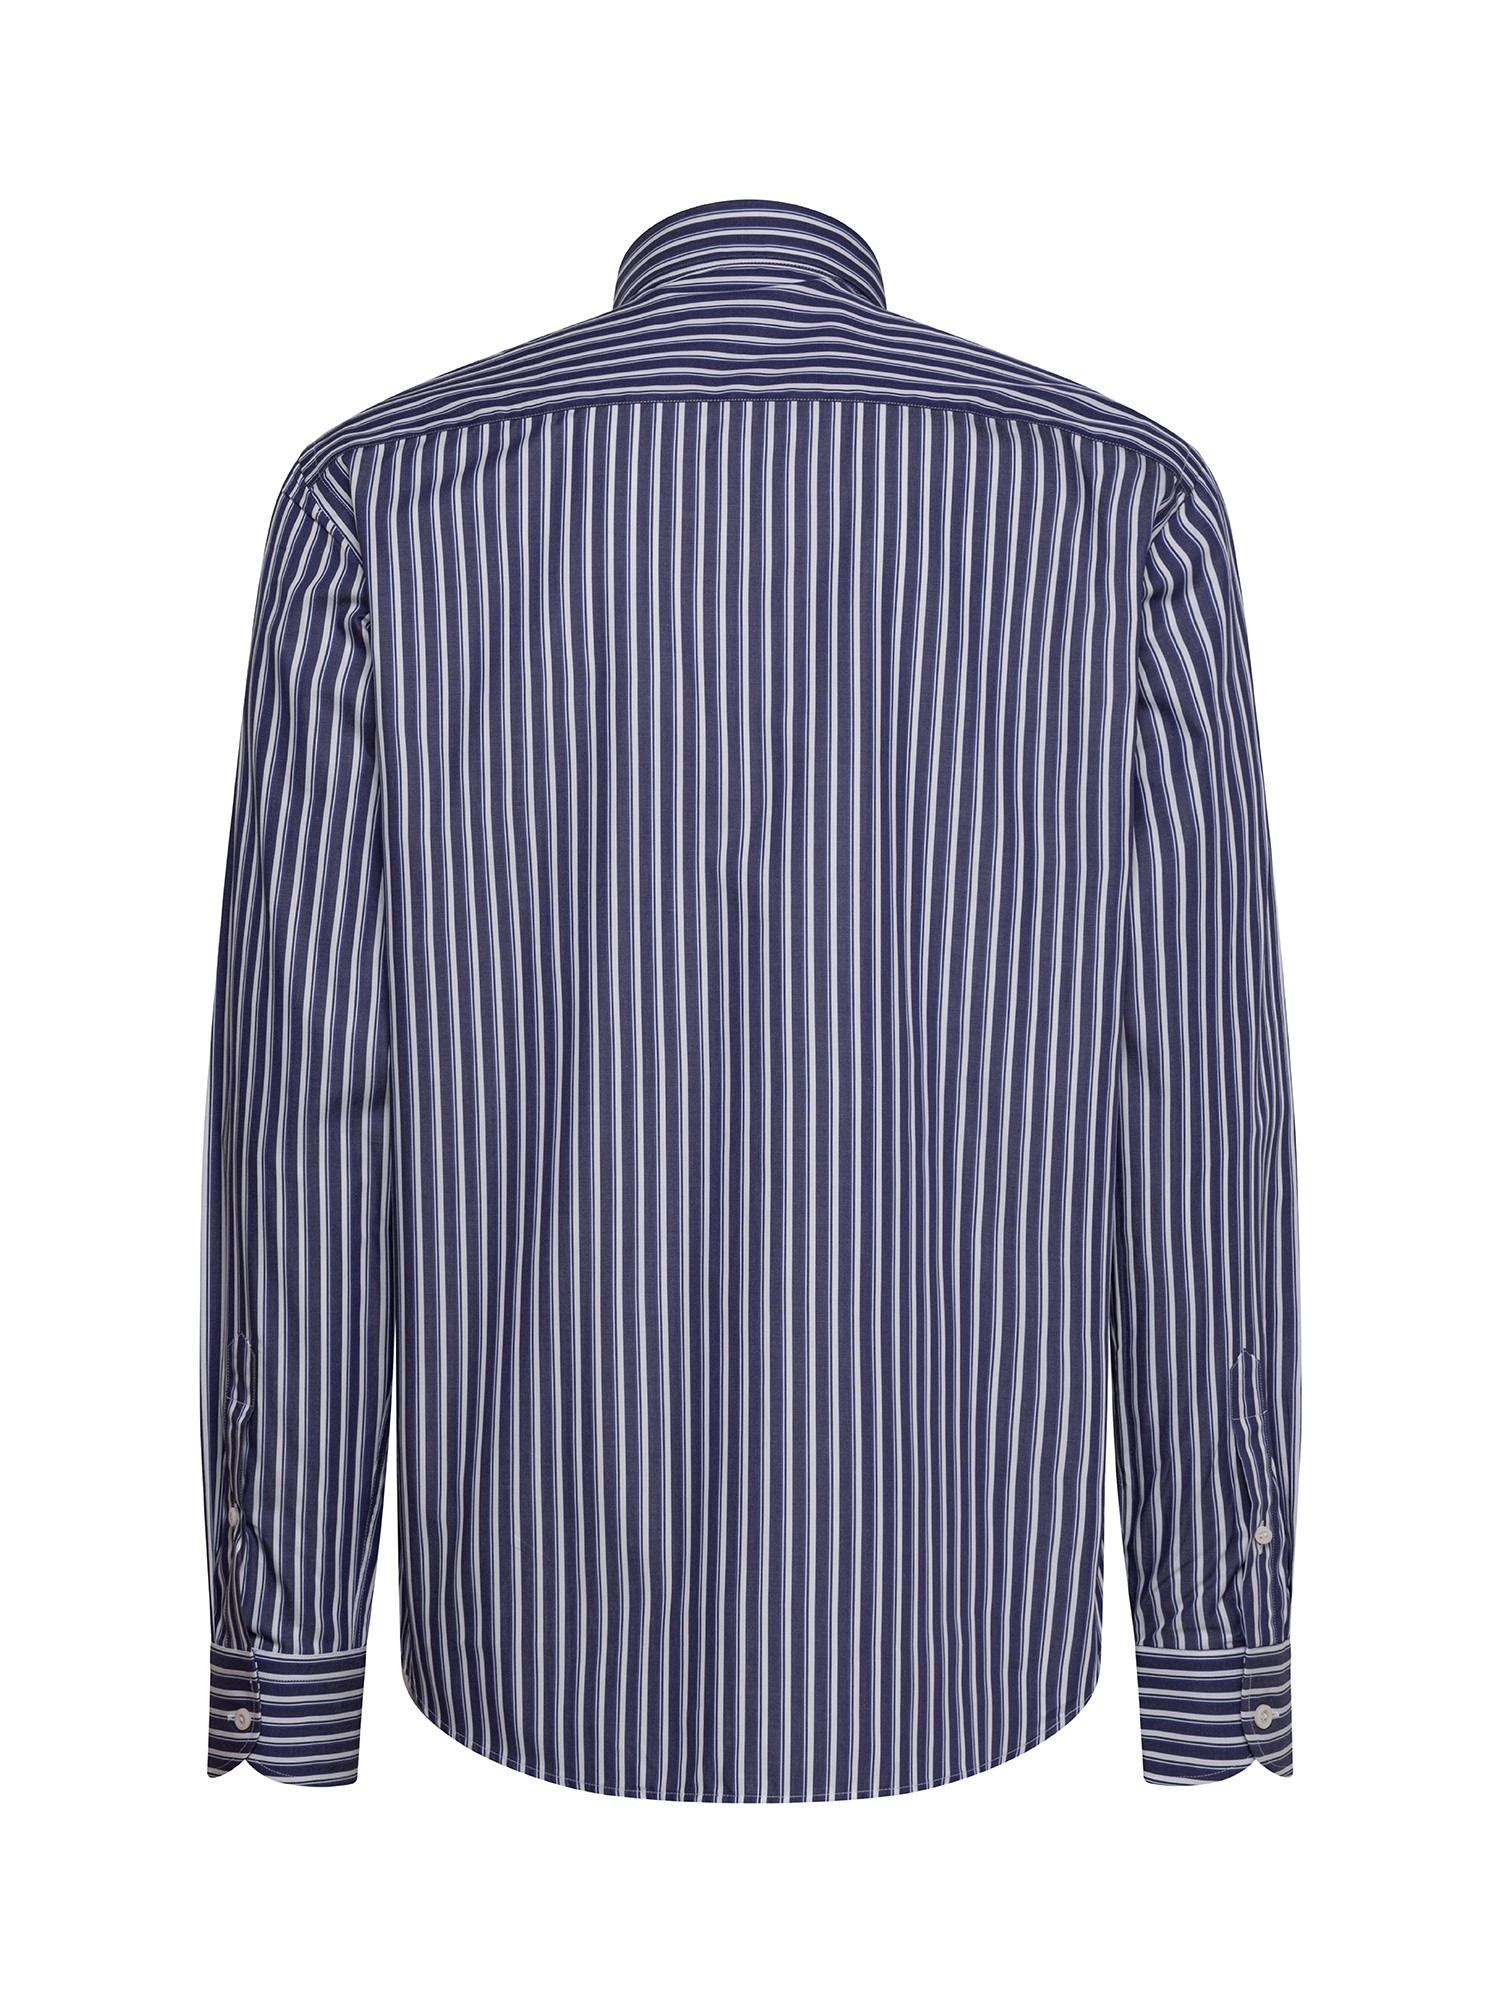 Luca D'Altieri - Camicia a righe tailor fit in puro cotone, Blu, large image number 2